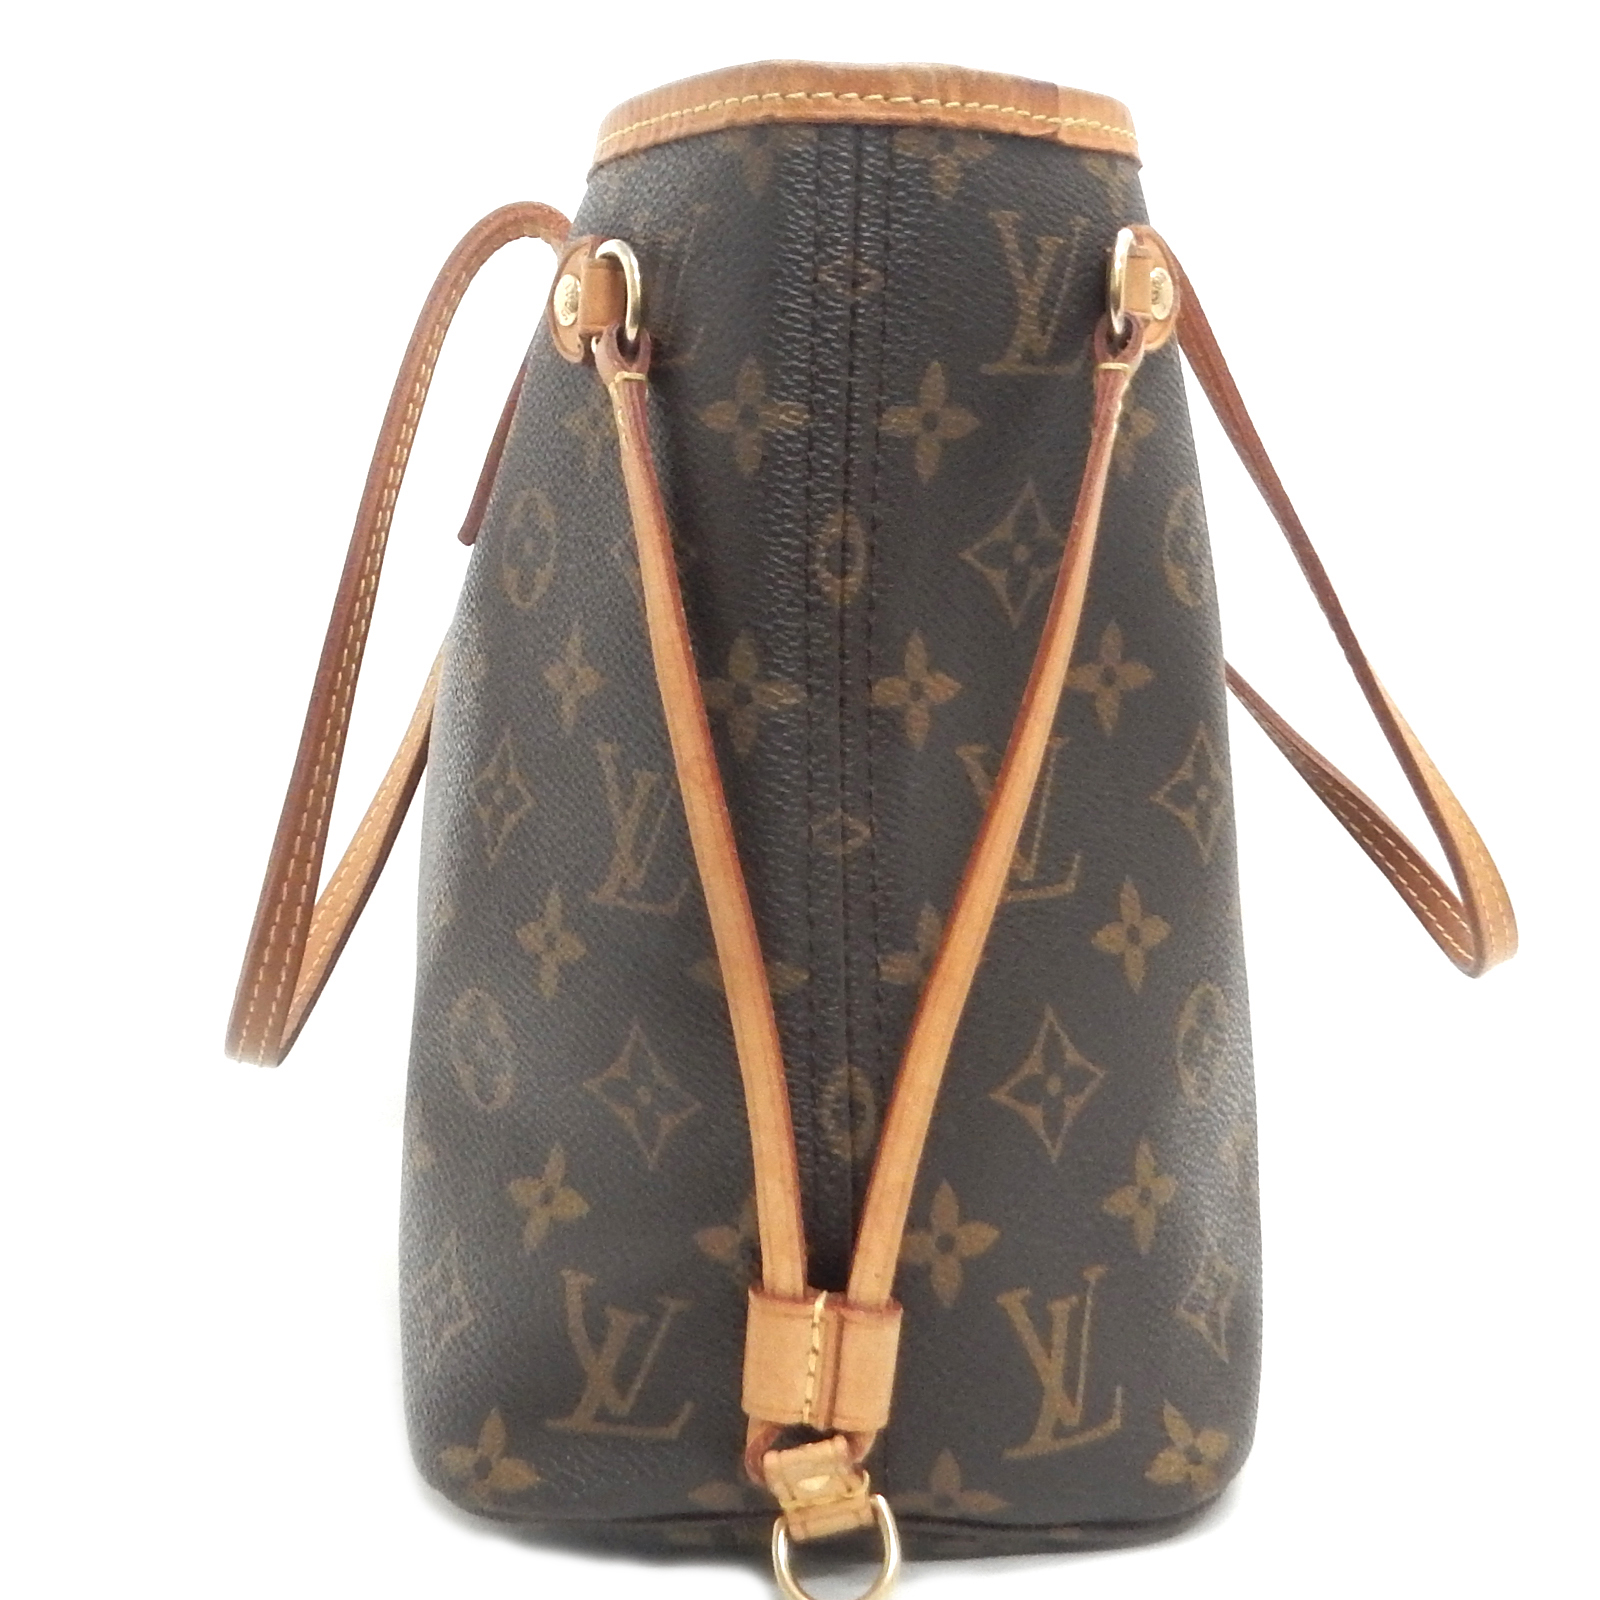 Rise-on LOUIS VUITTON MONOGRAM Neverfull PM Shopping Tote Bag Shoulder Bag #1 | eBay